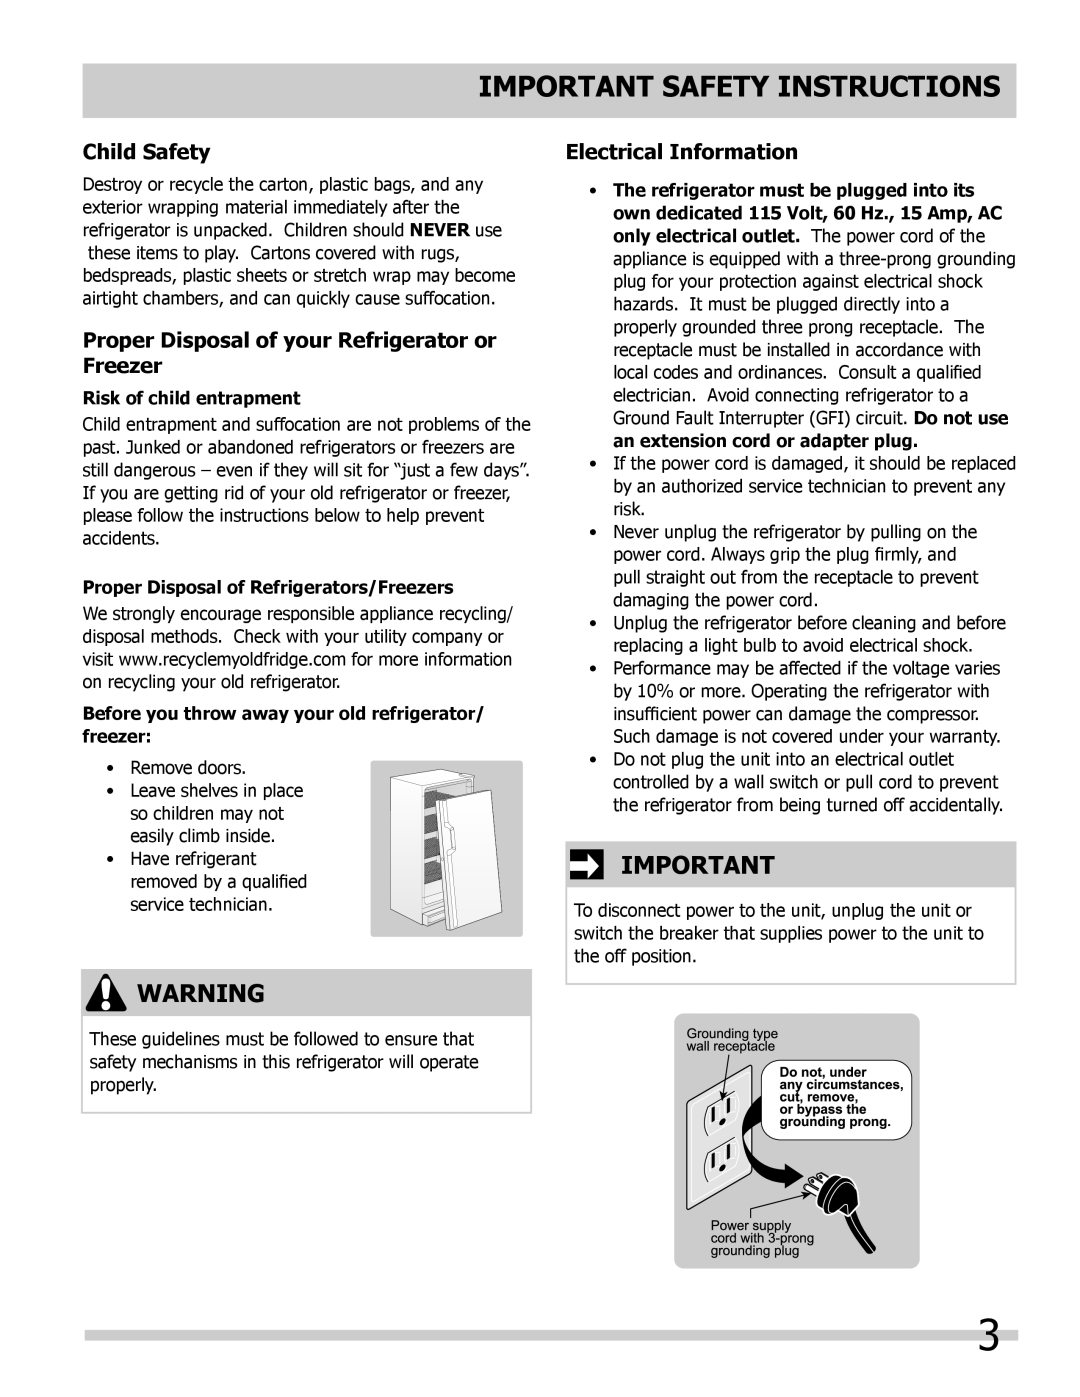 Frigidaire FPRH19D7LF, 297298700 Child Safety, Proper Disposal of your Refrigerator or Freezer, Electrical Information 